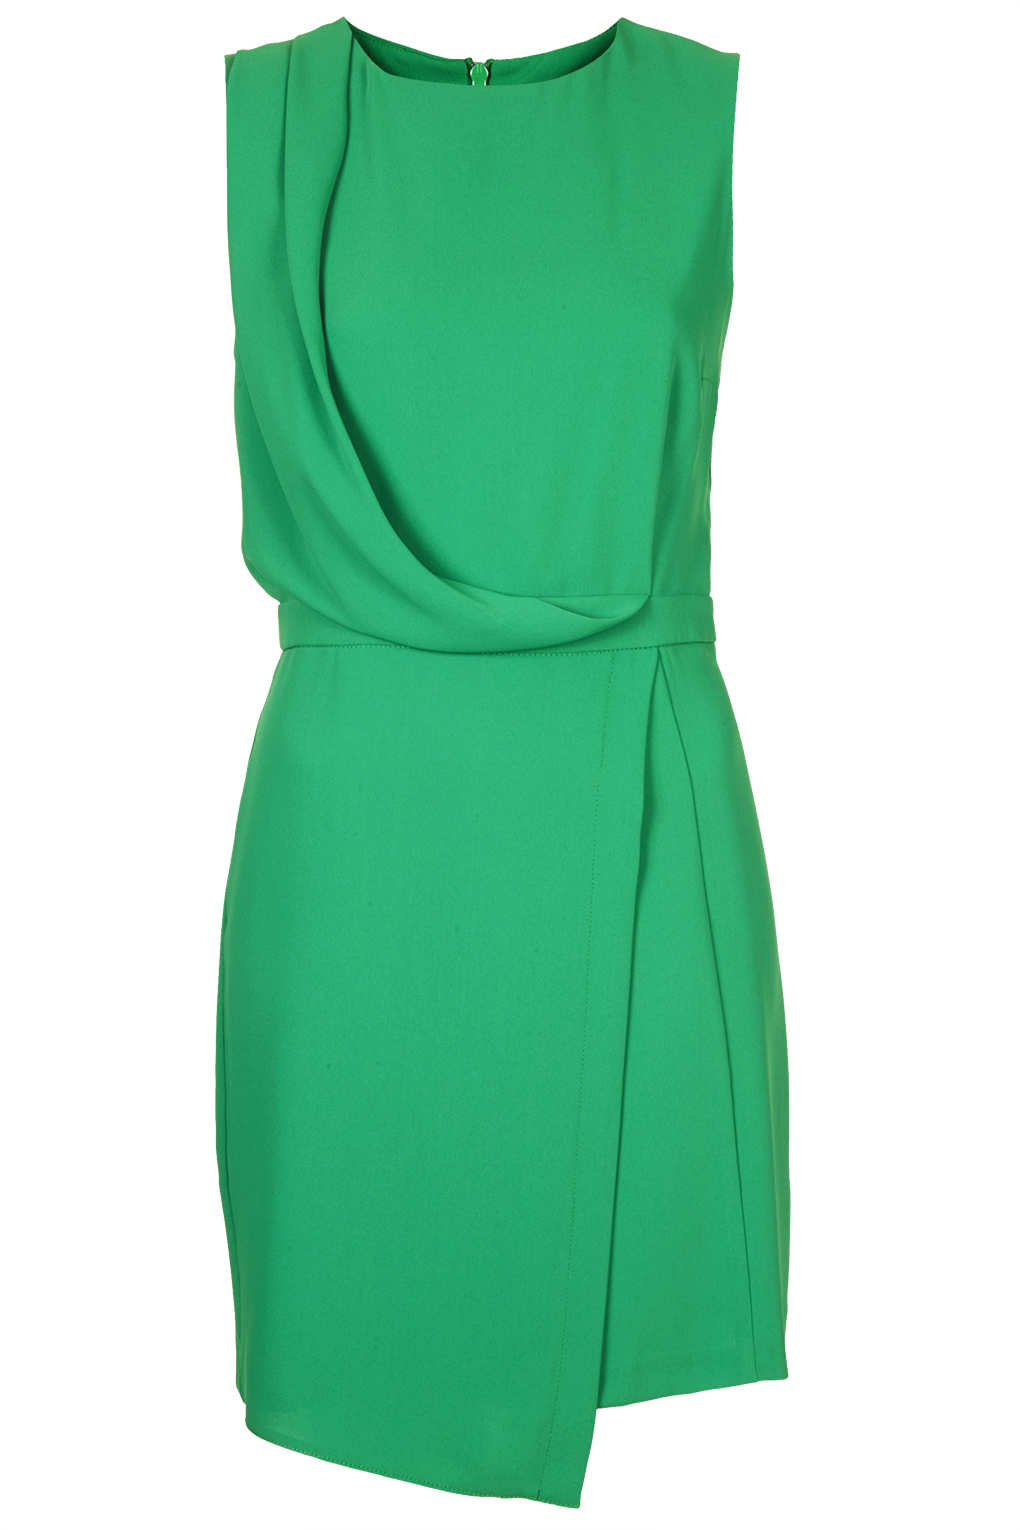 Lyst - Topshop Sleeveless Formal Drape Dress in Green